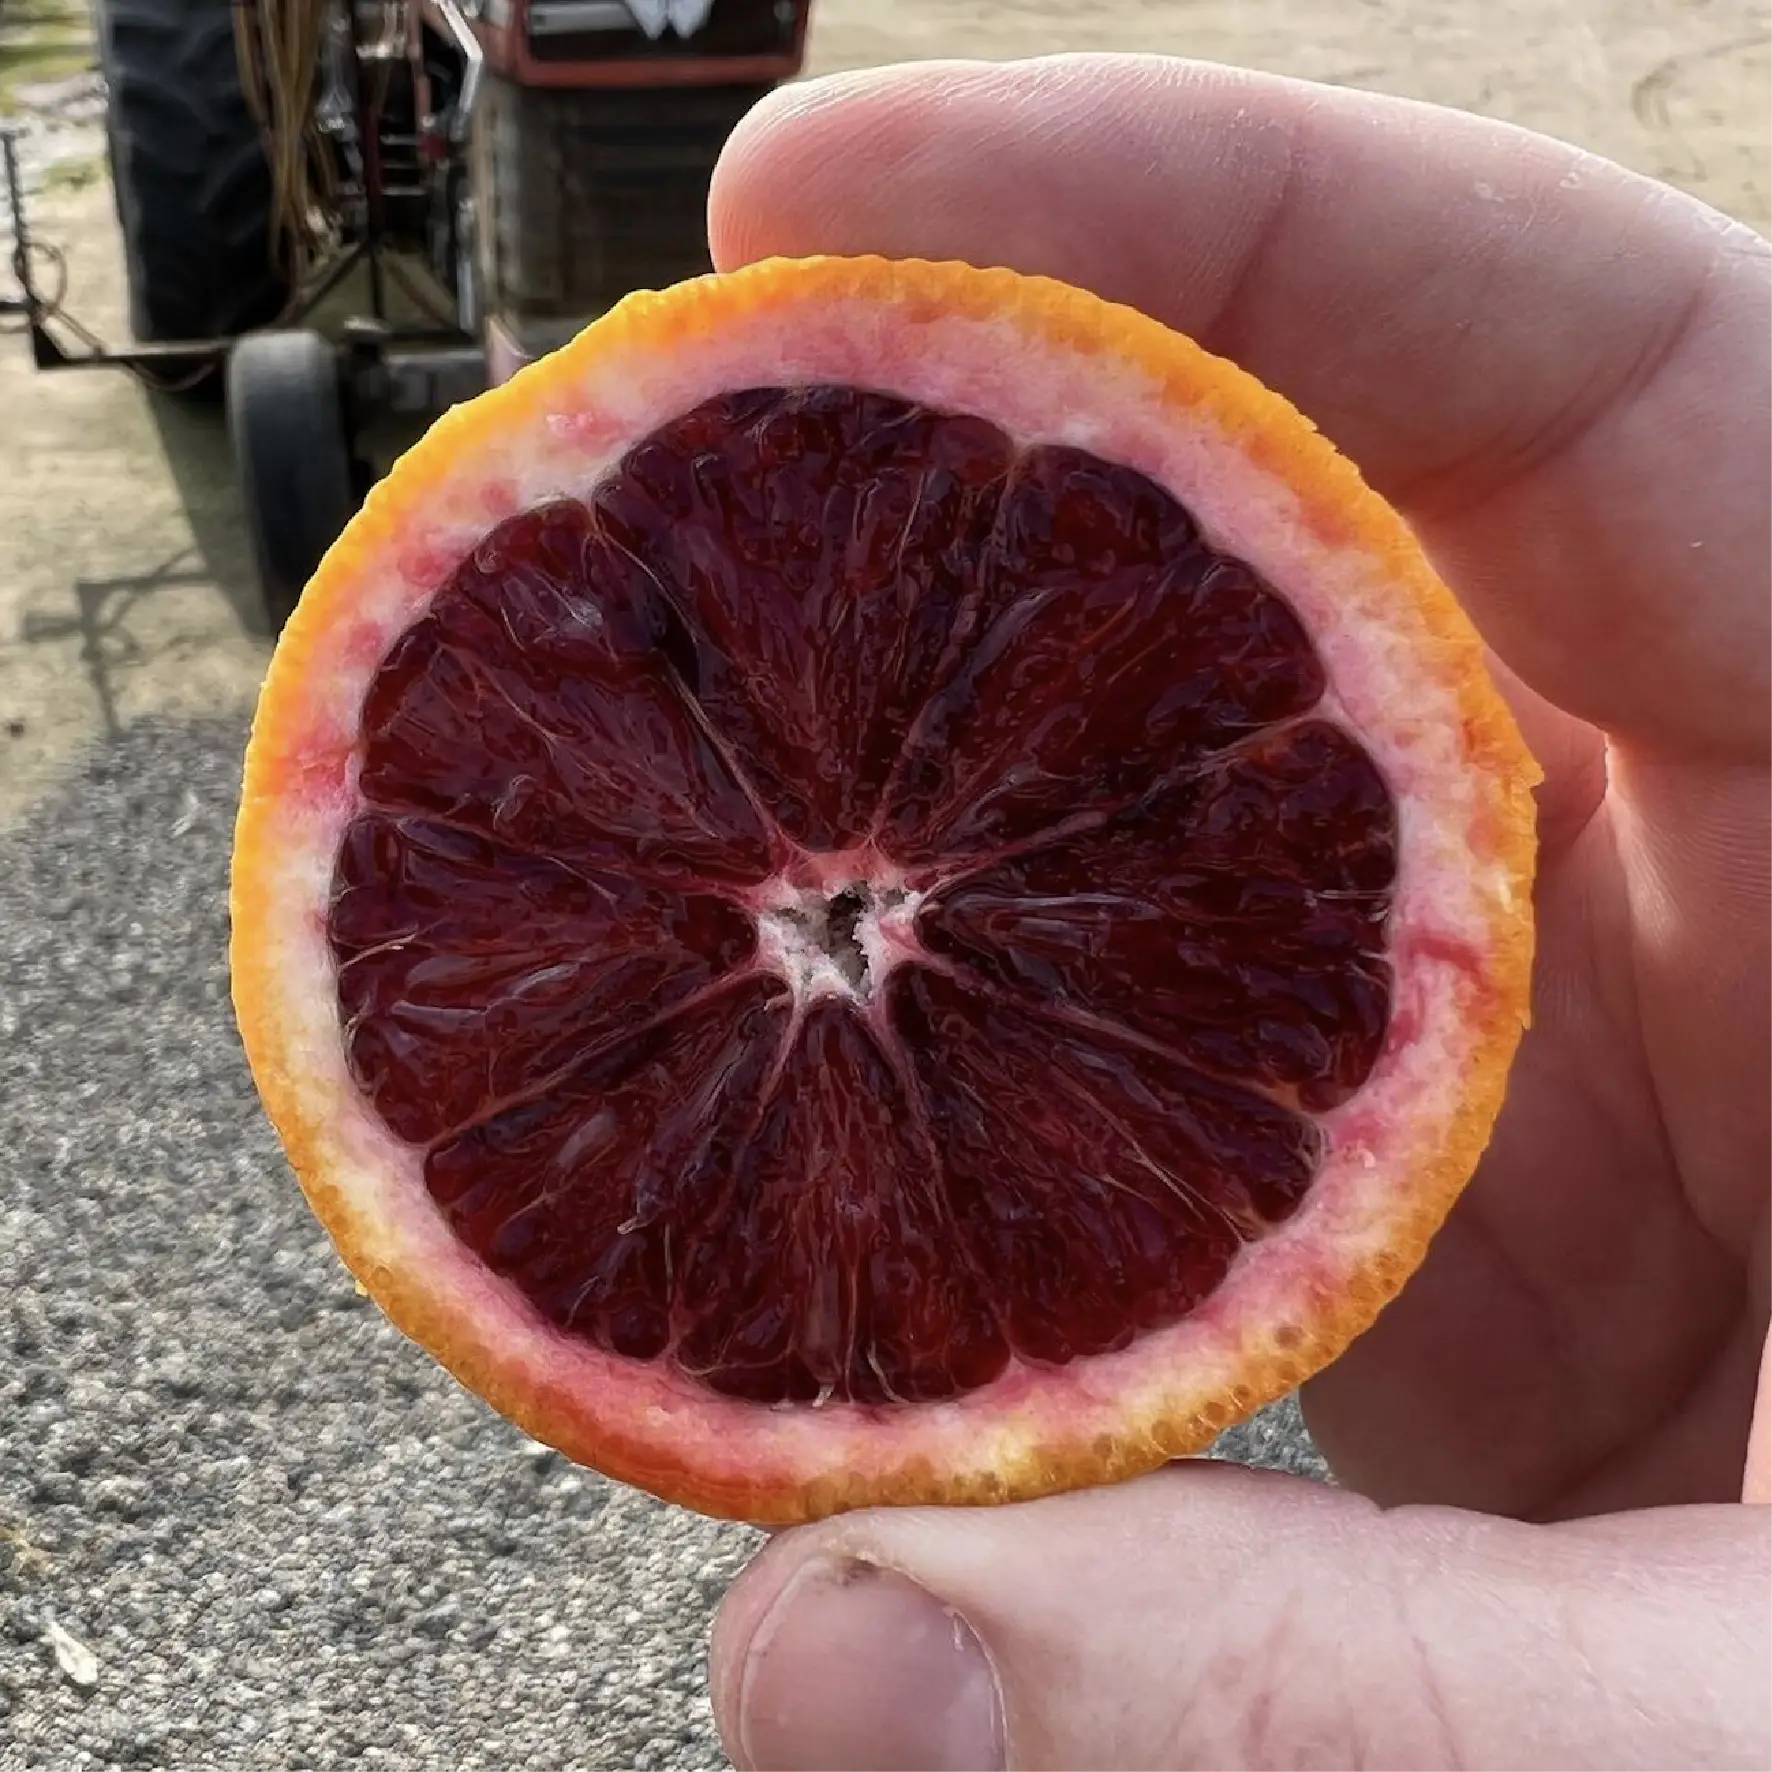 Tarocco Blood Oranges - Galpin Family Farms